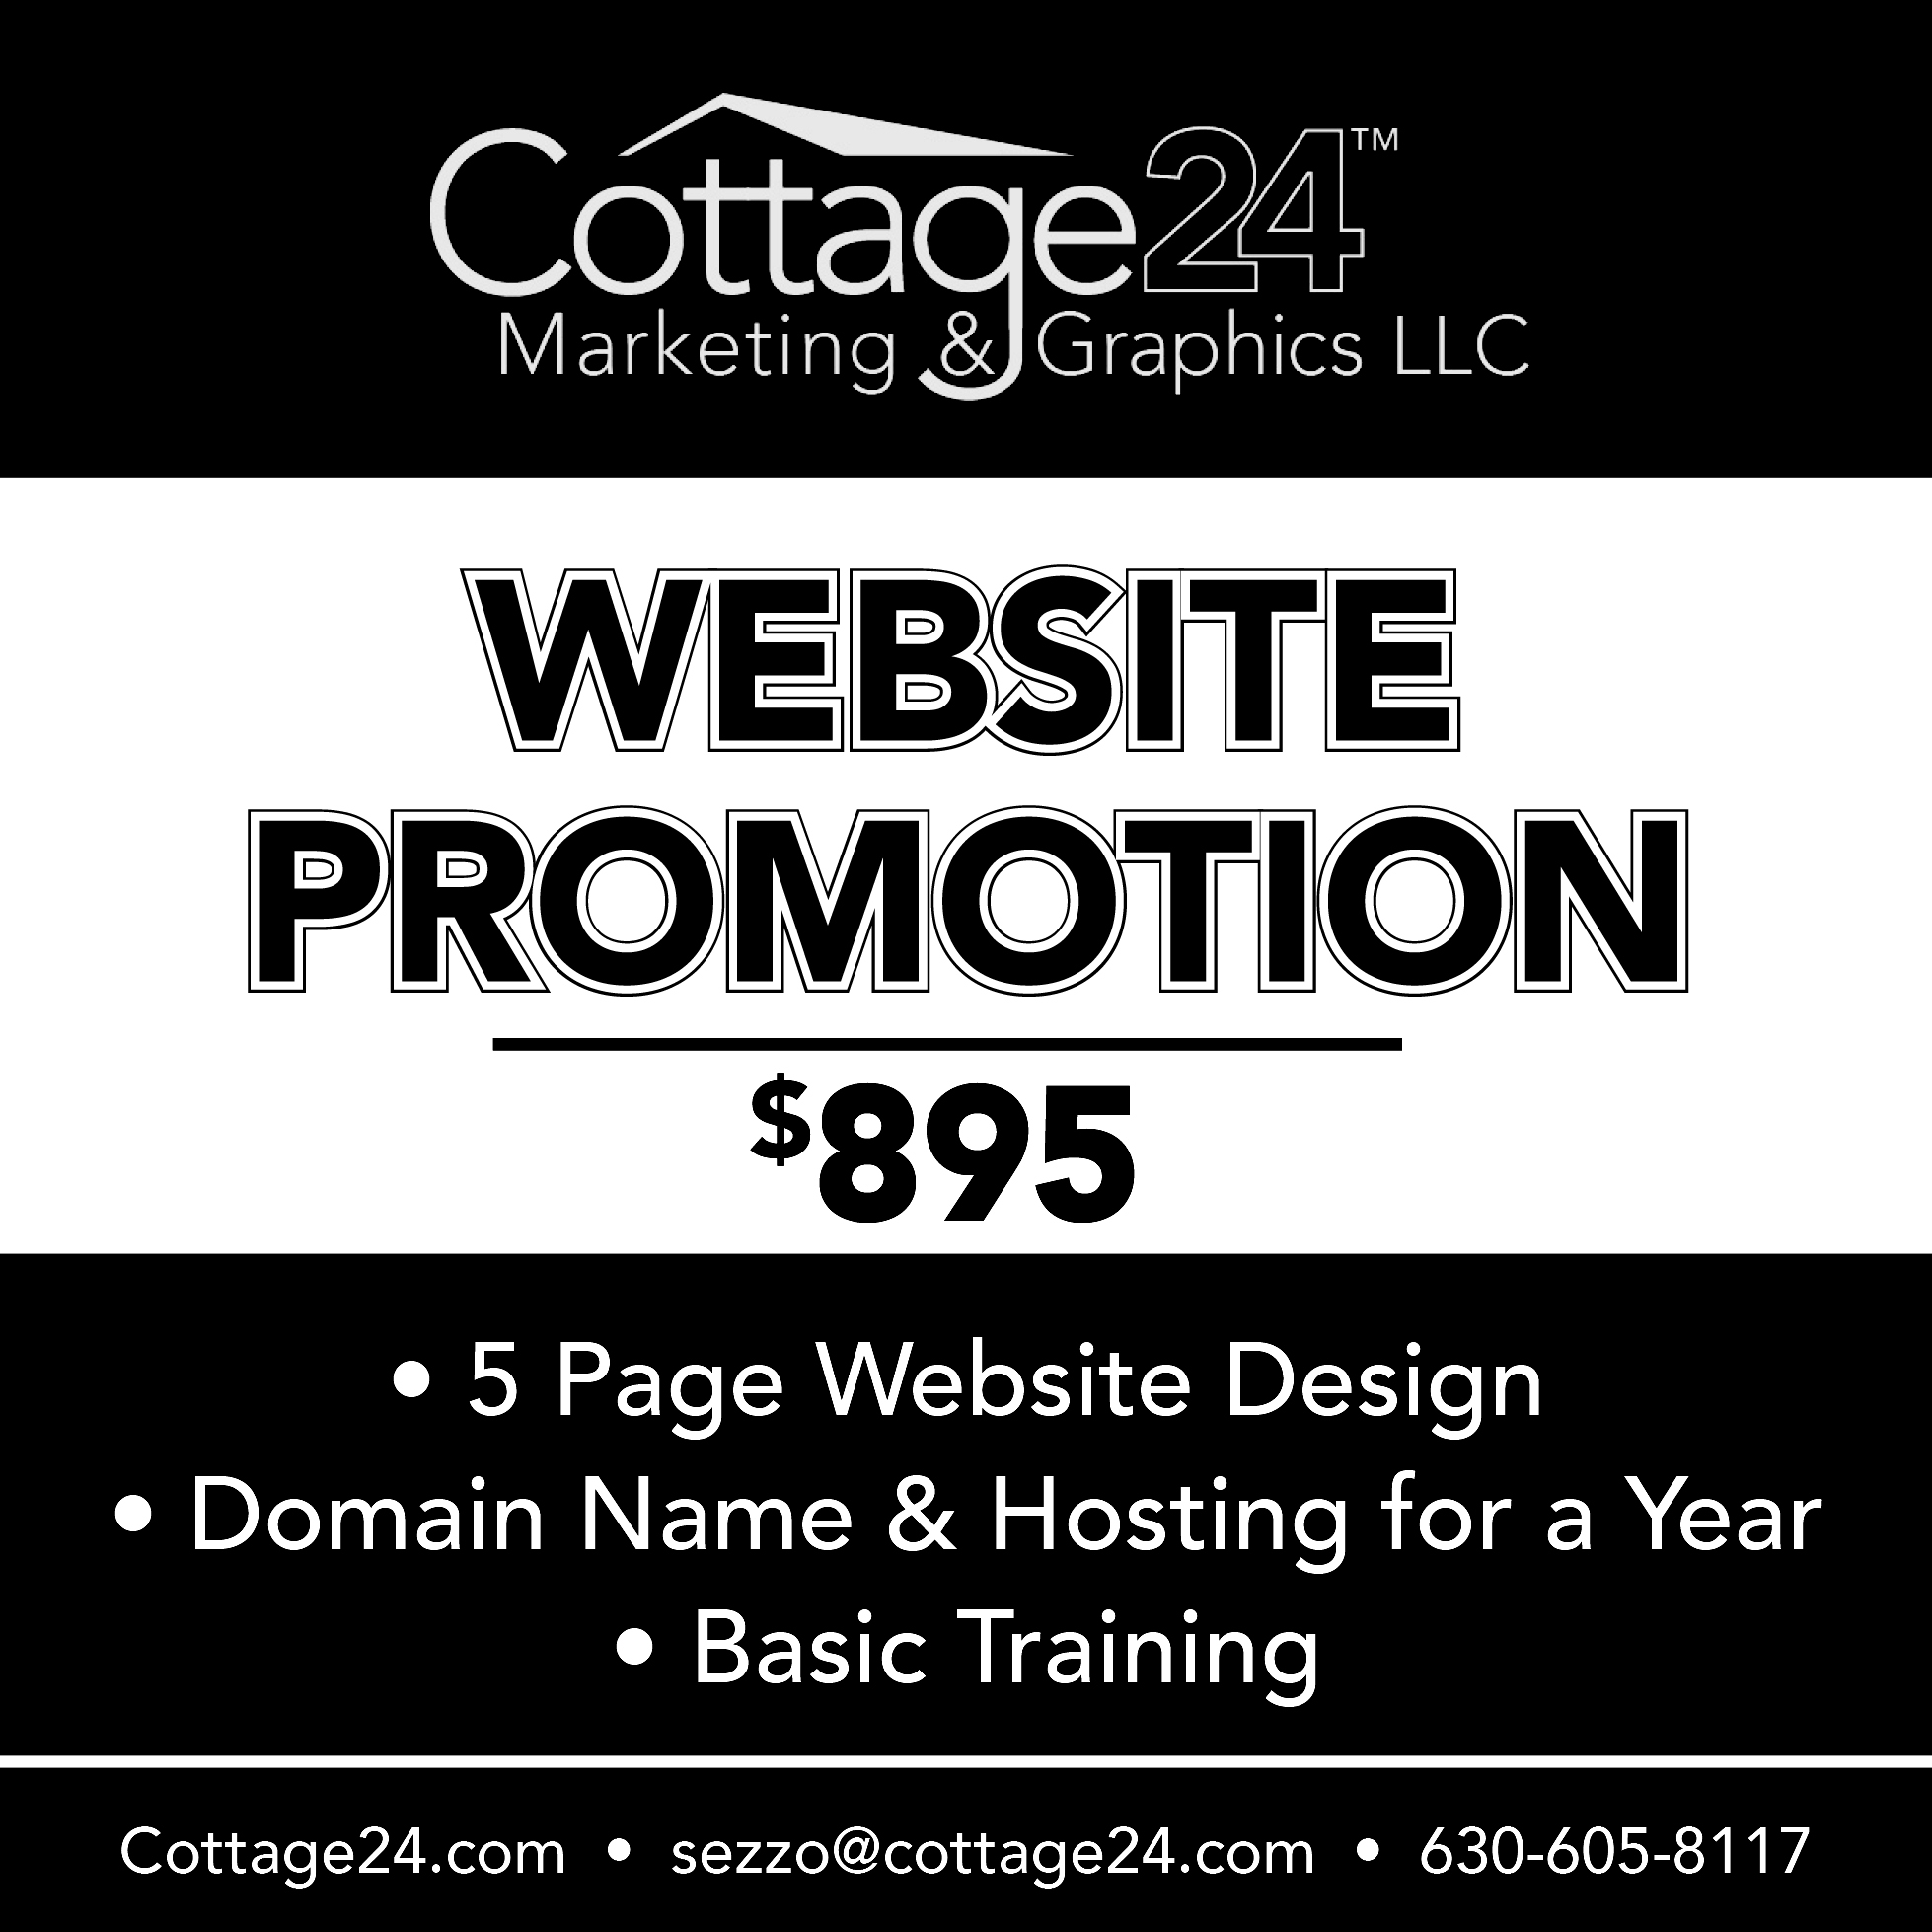 Website Promotion $895 - 5 page design, Domain Name & Hosting for 1 year, Basic Training included. Website Design